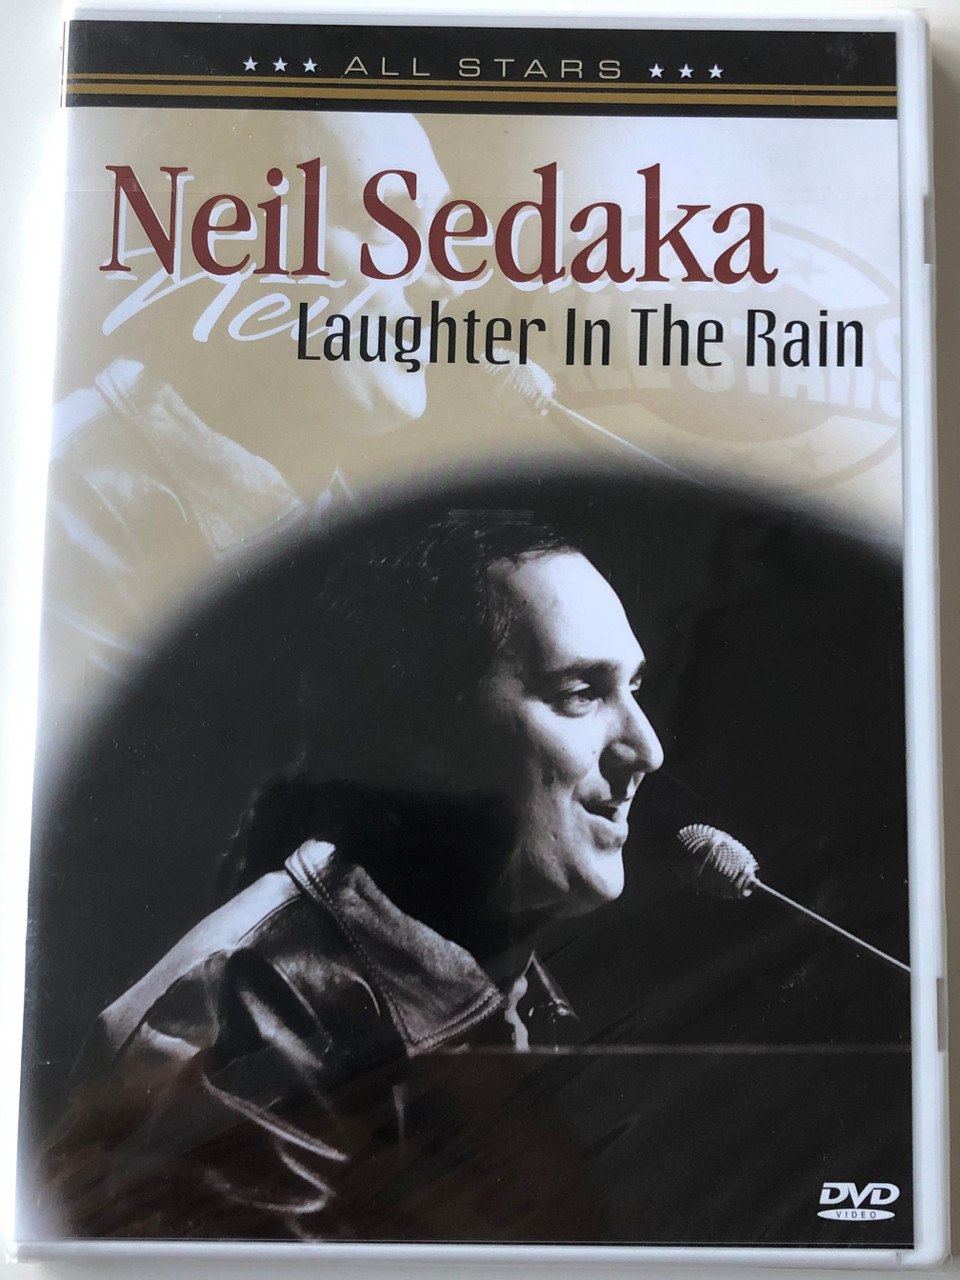 Neil Sedaka in Concert - Laughter om the Rain DVD 2005 / All Stars /  Standing on the inside, New York City Blues, Bad Blood / Extra: Biography -  bibleinmylanguage